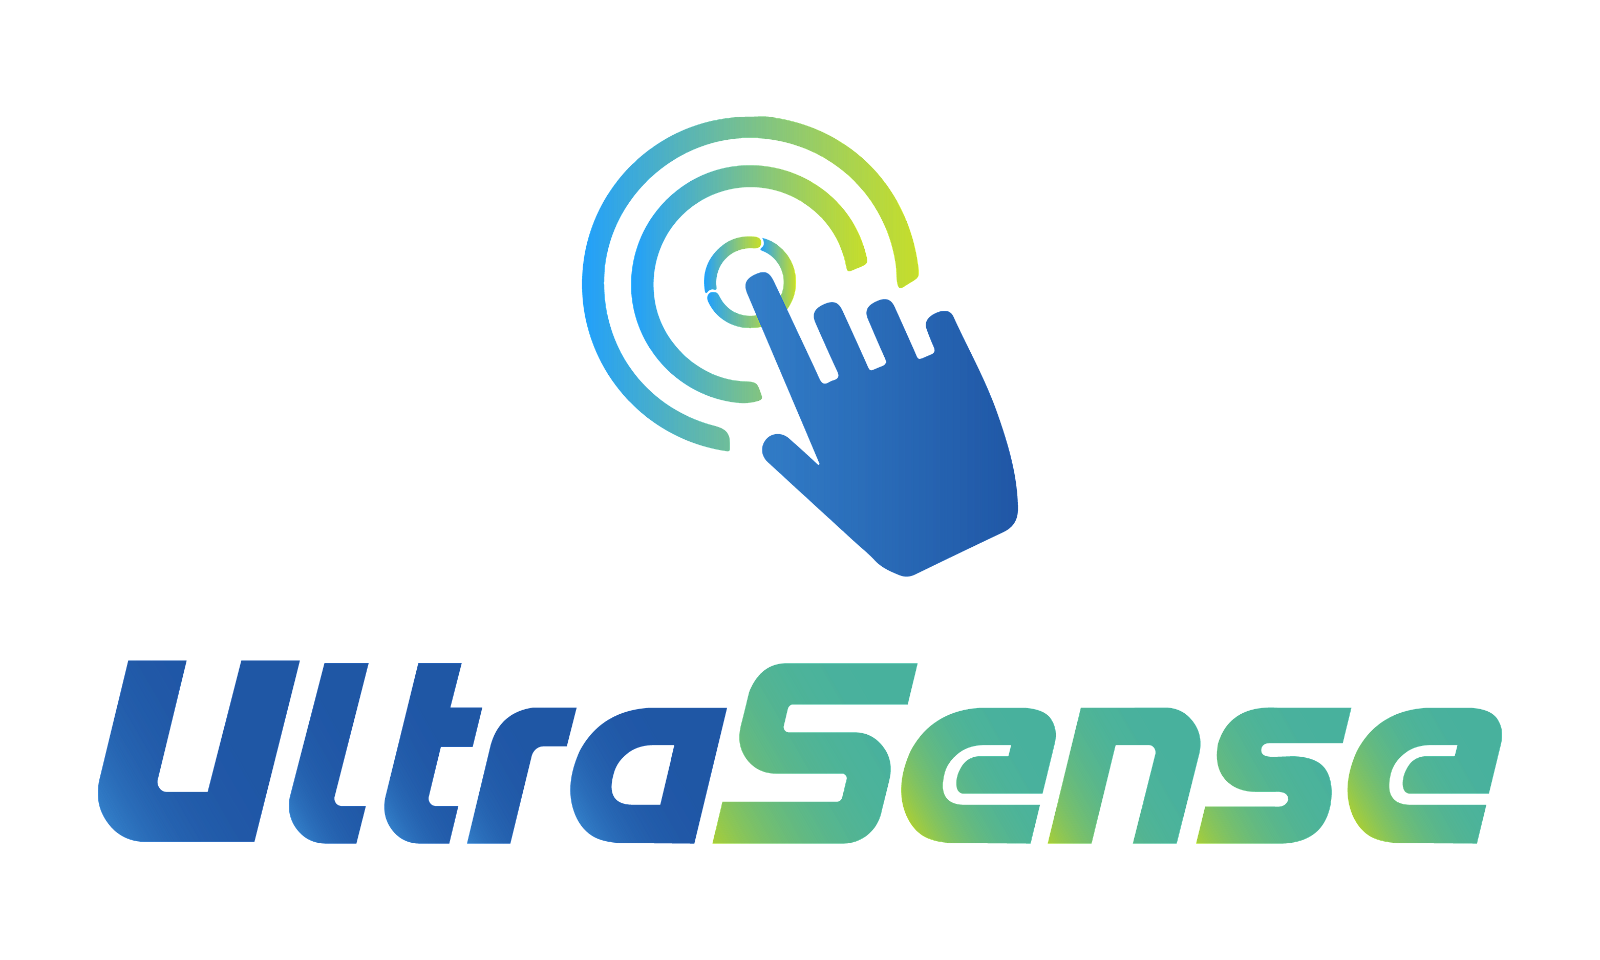 UltraSense.com - Creative brandable domain for sale